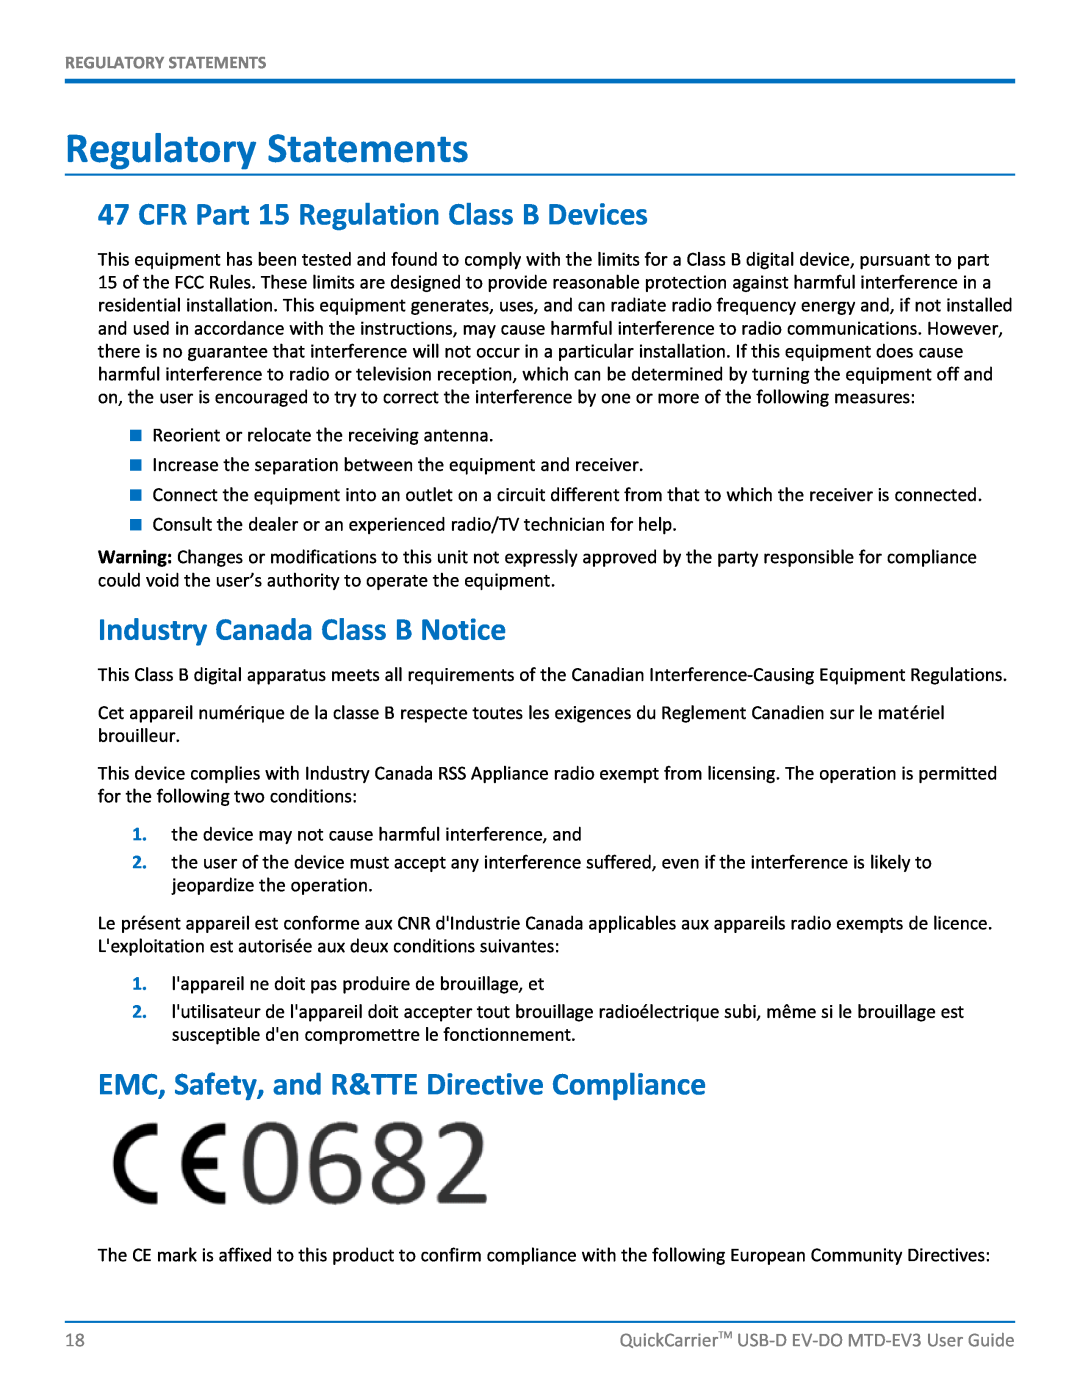 Multi-Tech Systems MTD-EVe Regulatory Statements, CFR Part 15 Regulation Class B Devices, Industry Canada Class B Notice 